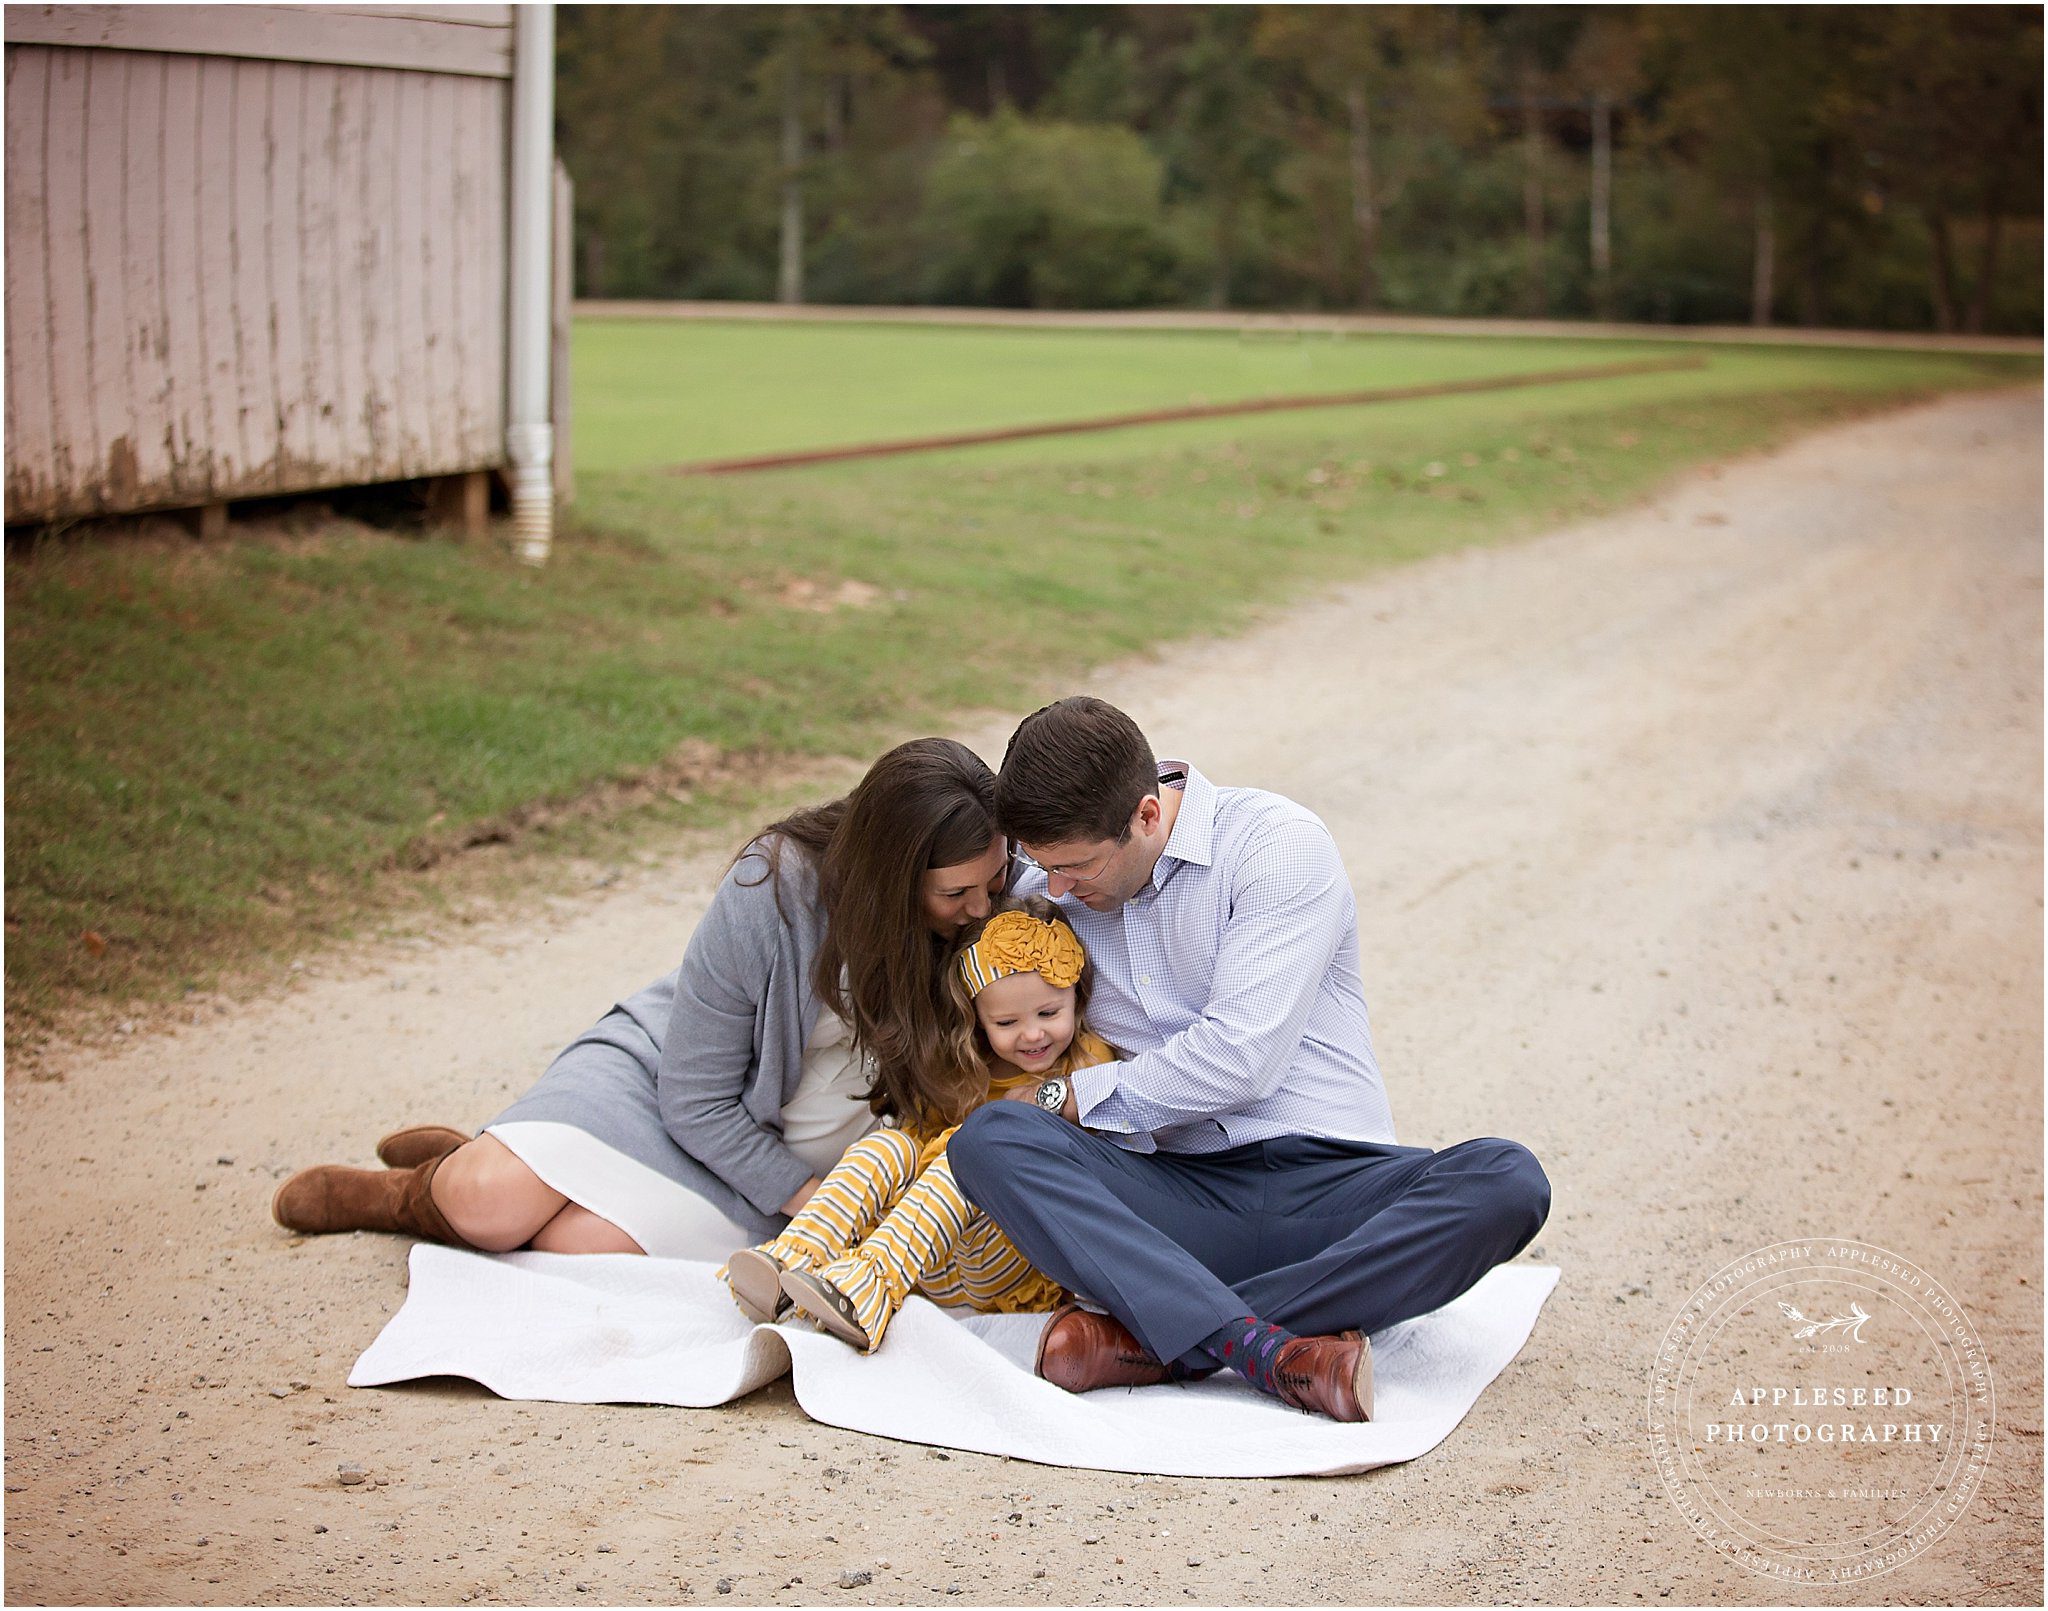 M Family | Atlanta Maternity Photographer | Appleseed Photography